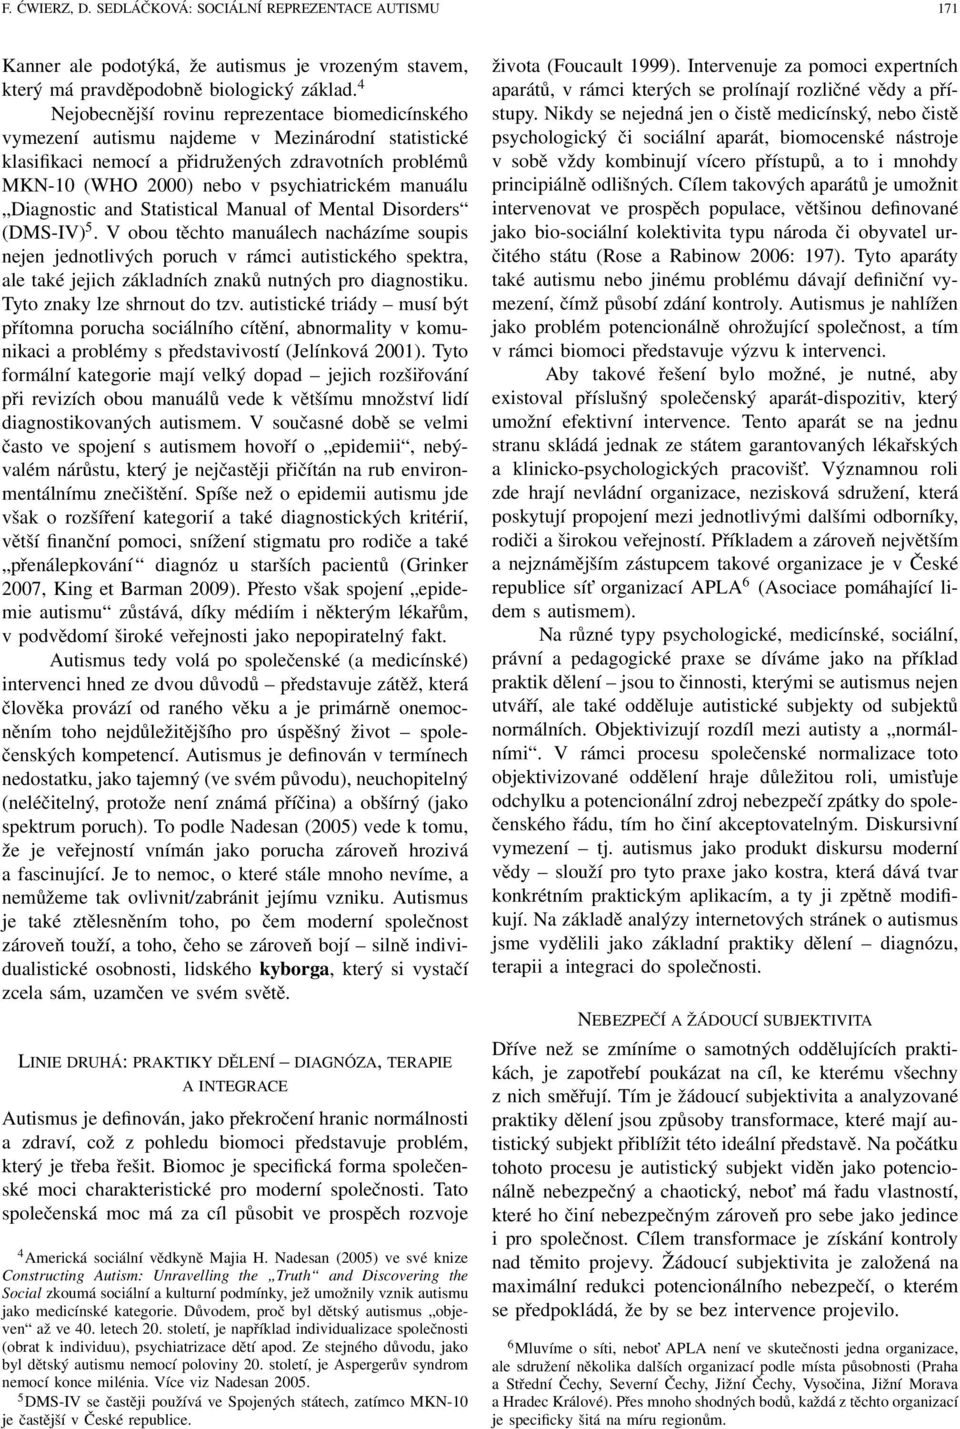 manuálu Diagnostic and Statistical Manual of Mental Disorders (DMS-IV) 5.